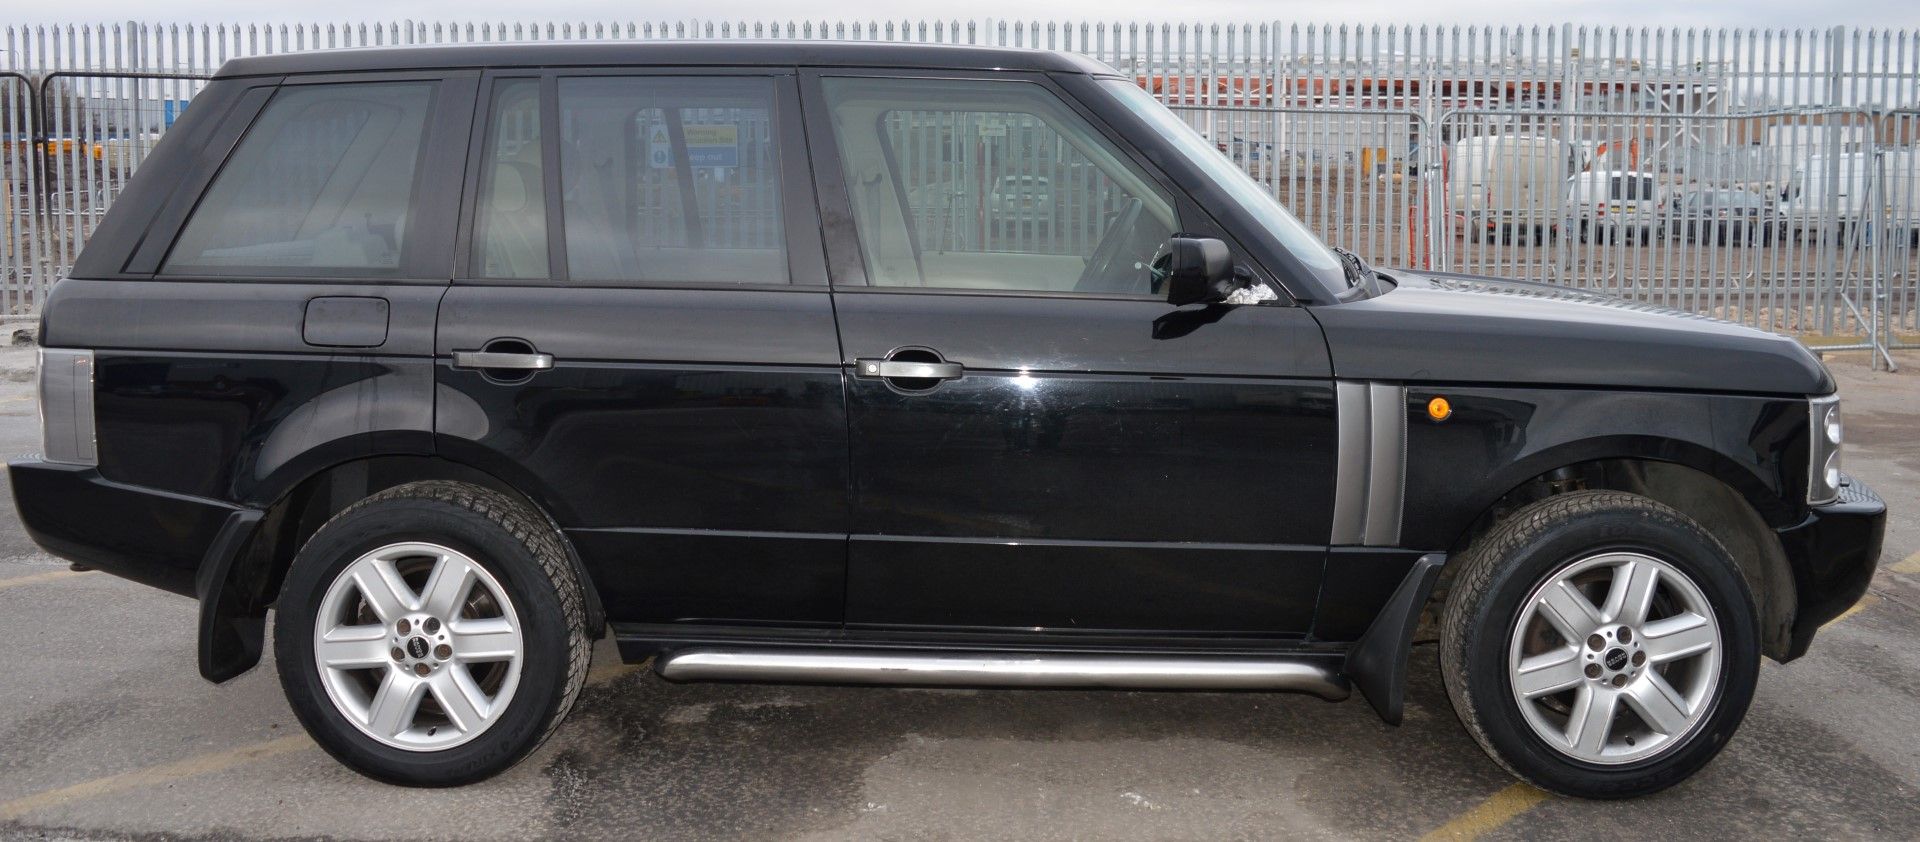 1 x Range Rover Vogue V8 4.4 Automatic - Black, Leather Interior, Petrol, Television, Premium - Image 44 of 63